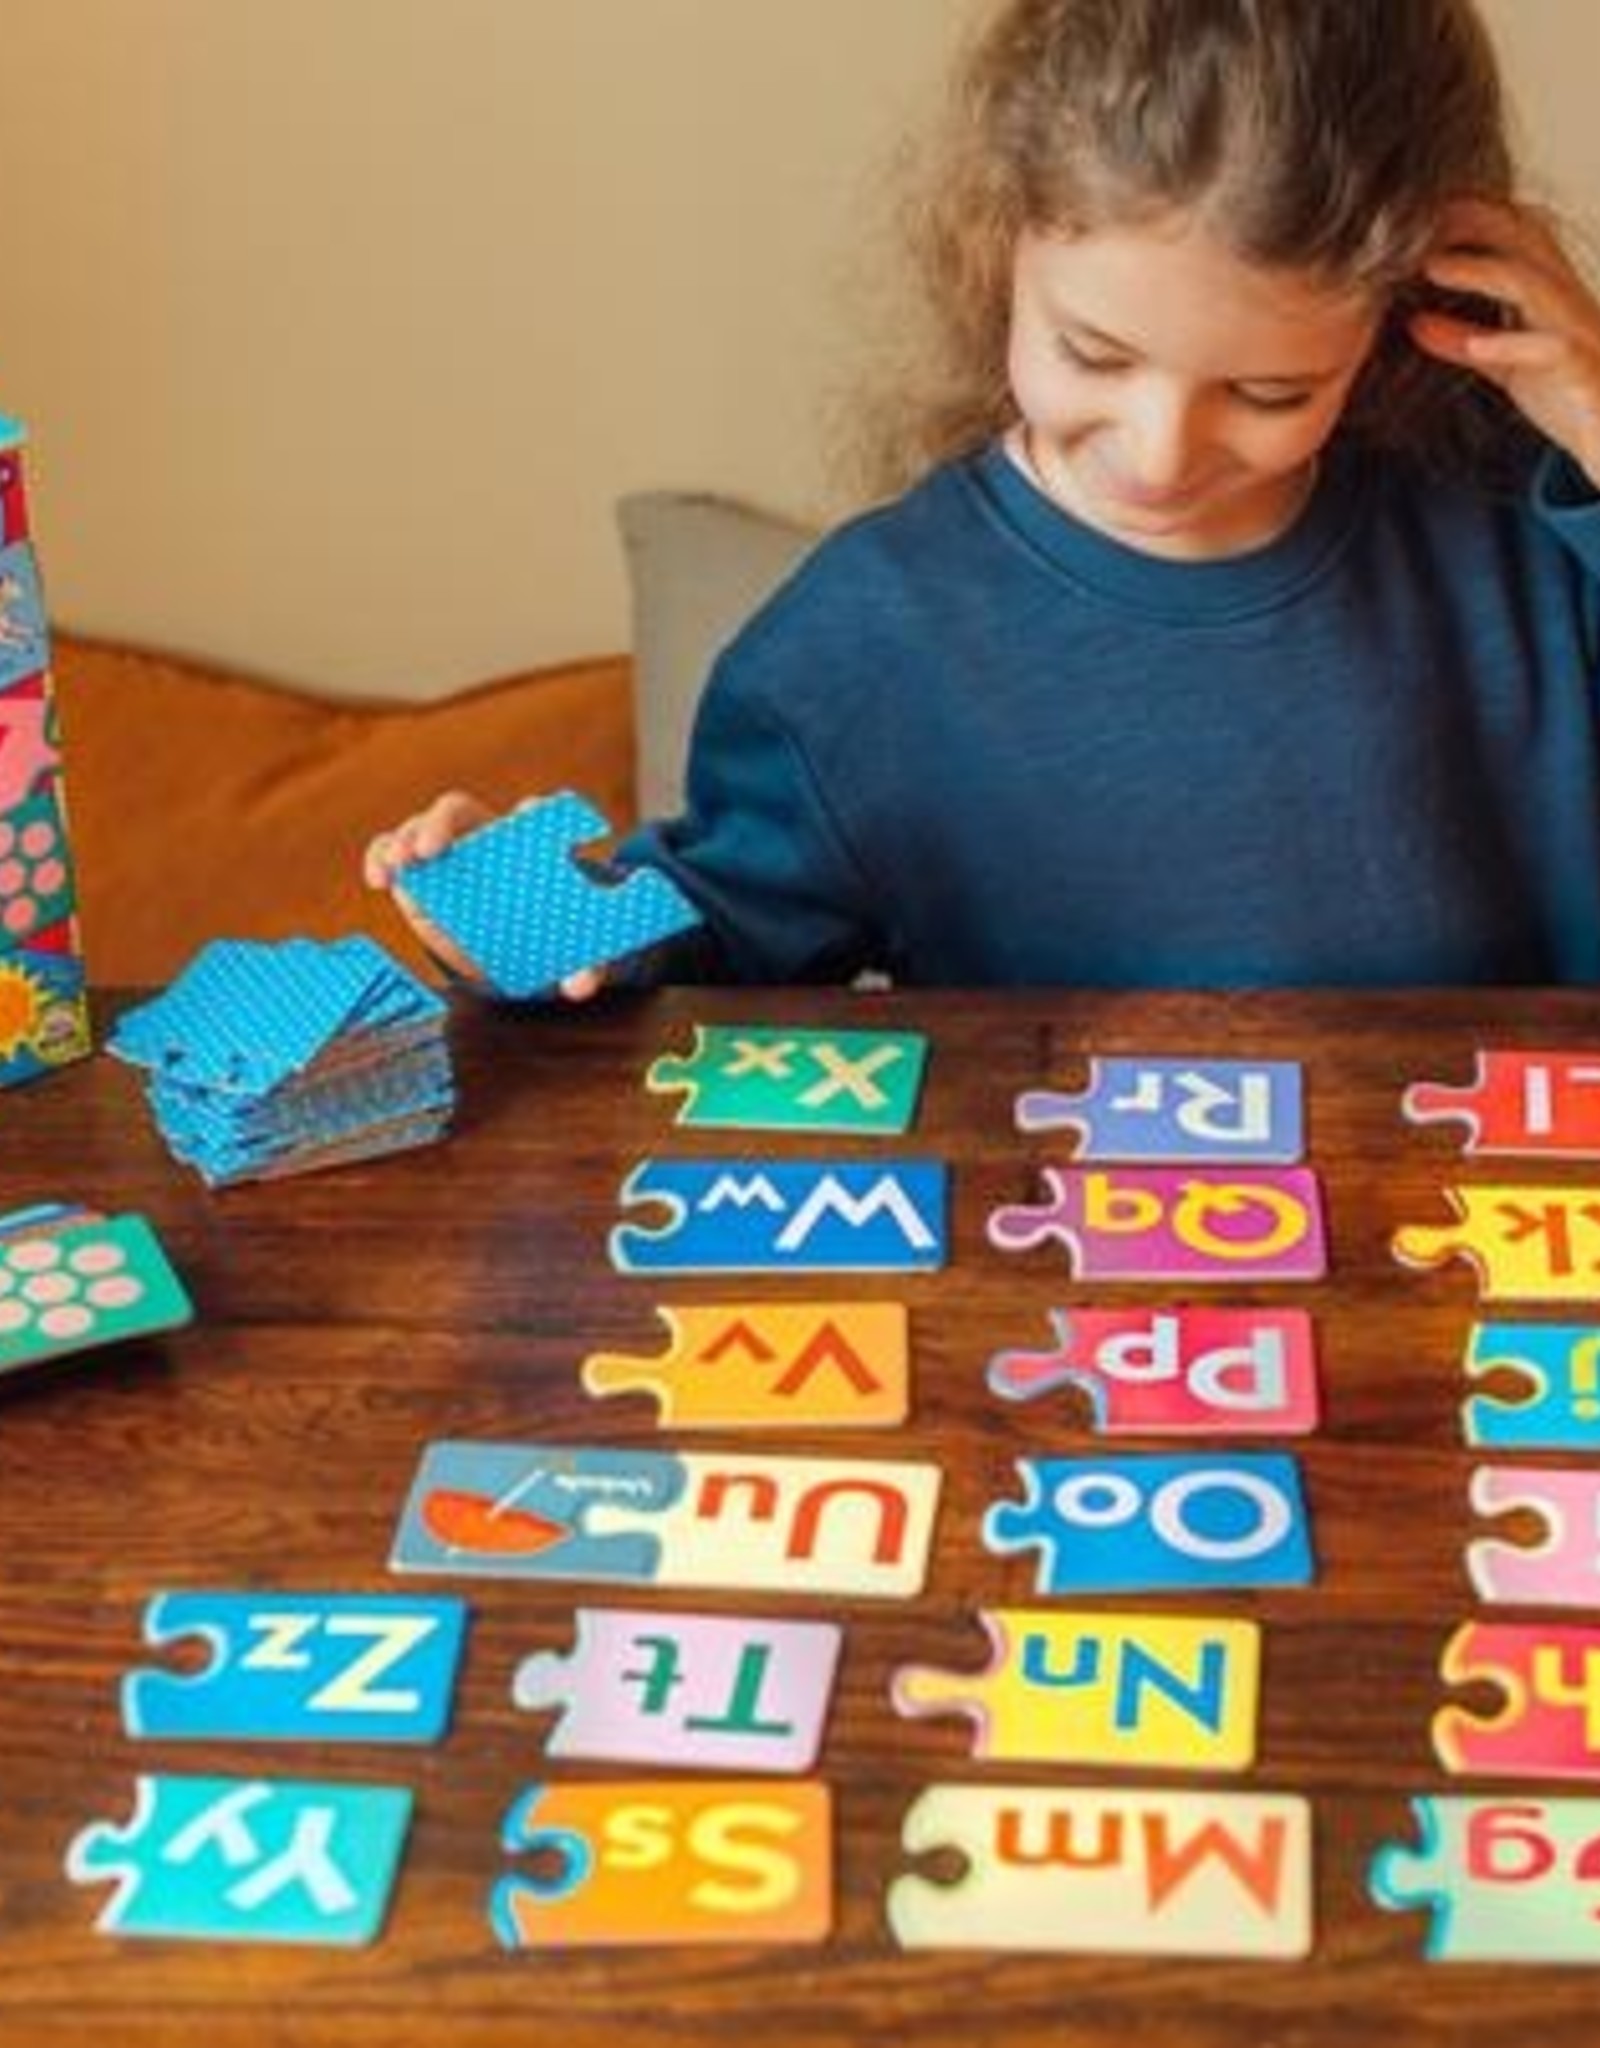 Eeboo Alphabet &Numbers Puzzle Pairs